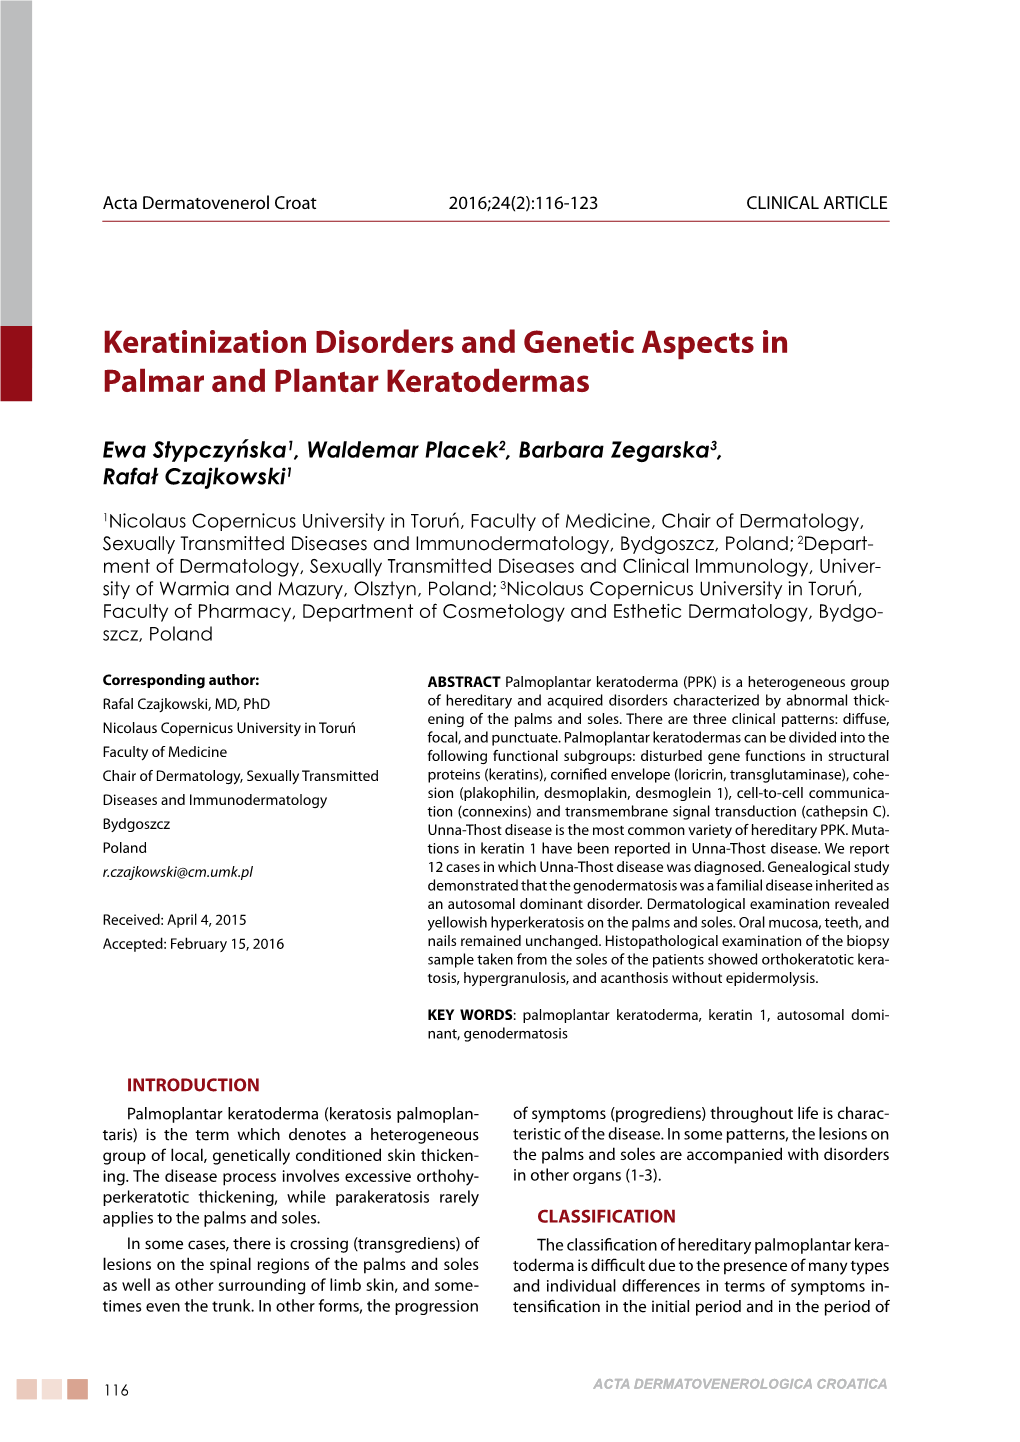 Keratinization Disorders and Genetic Aspects in Palmar and Plantar Keratodermas